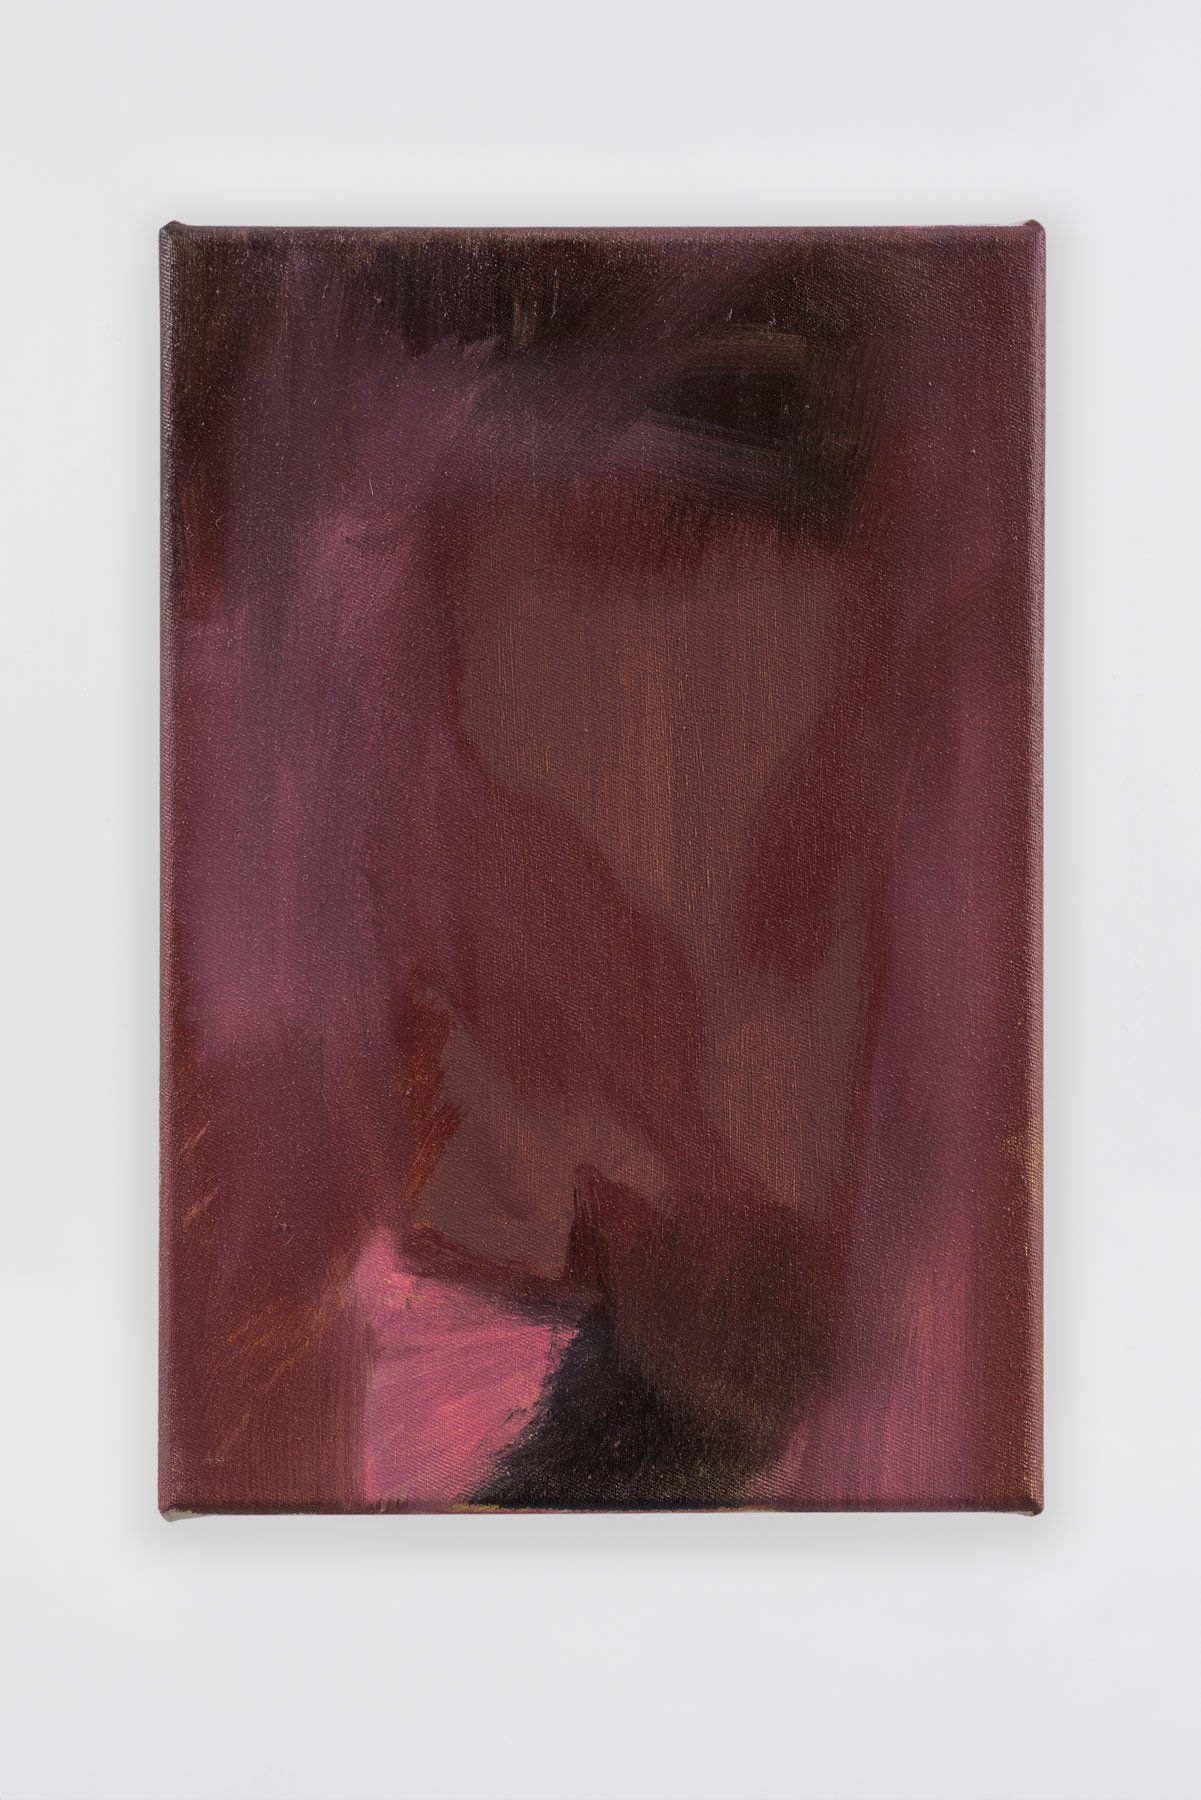 B04 - 0121, 2021, oil on canvas, 35 x 24 cm